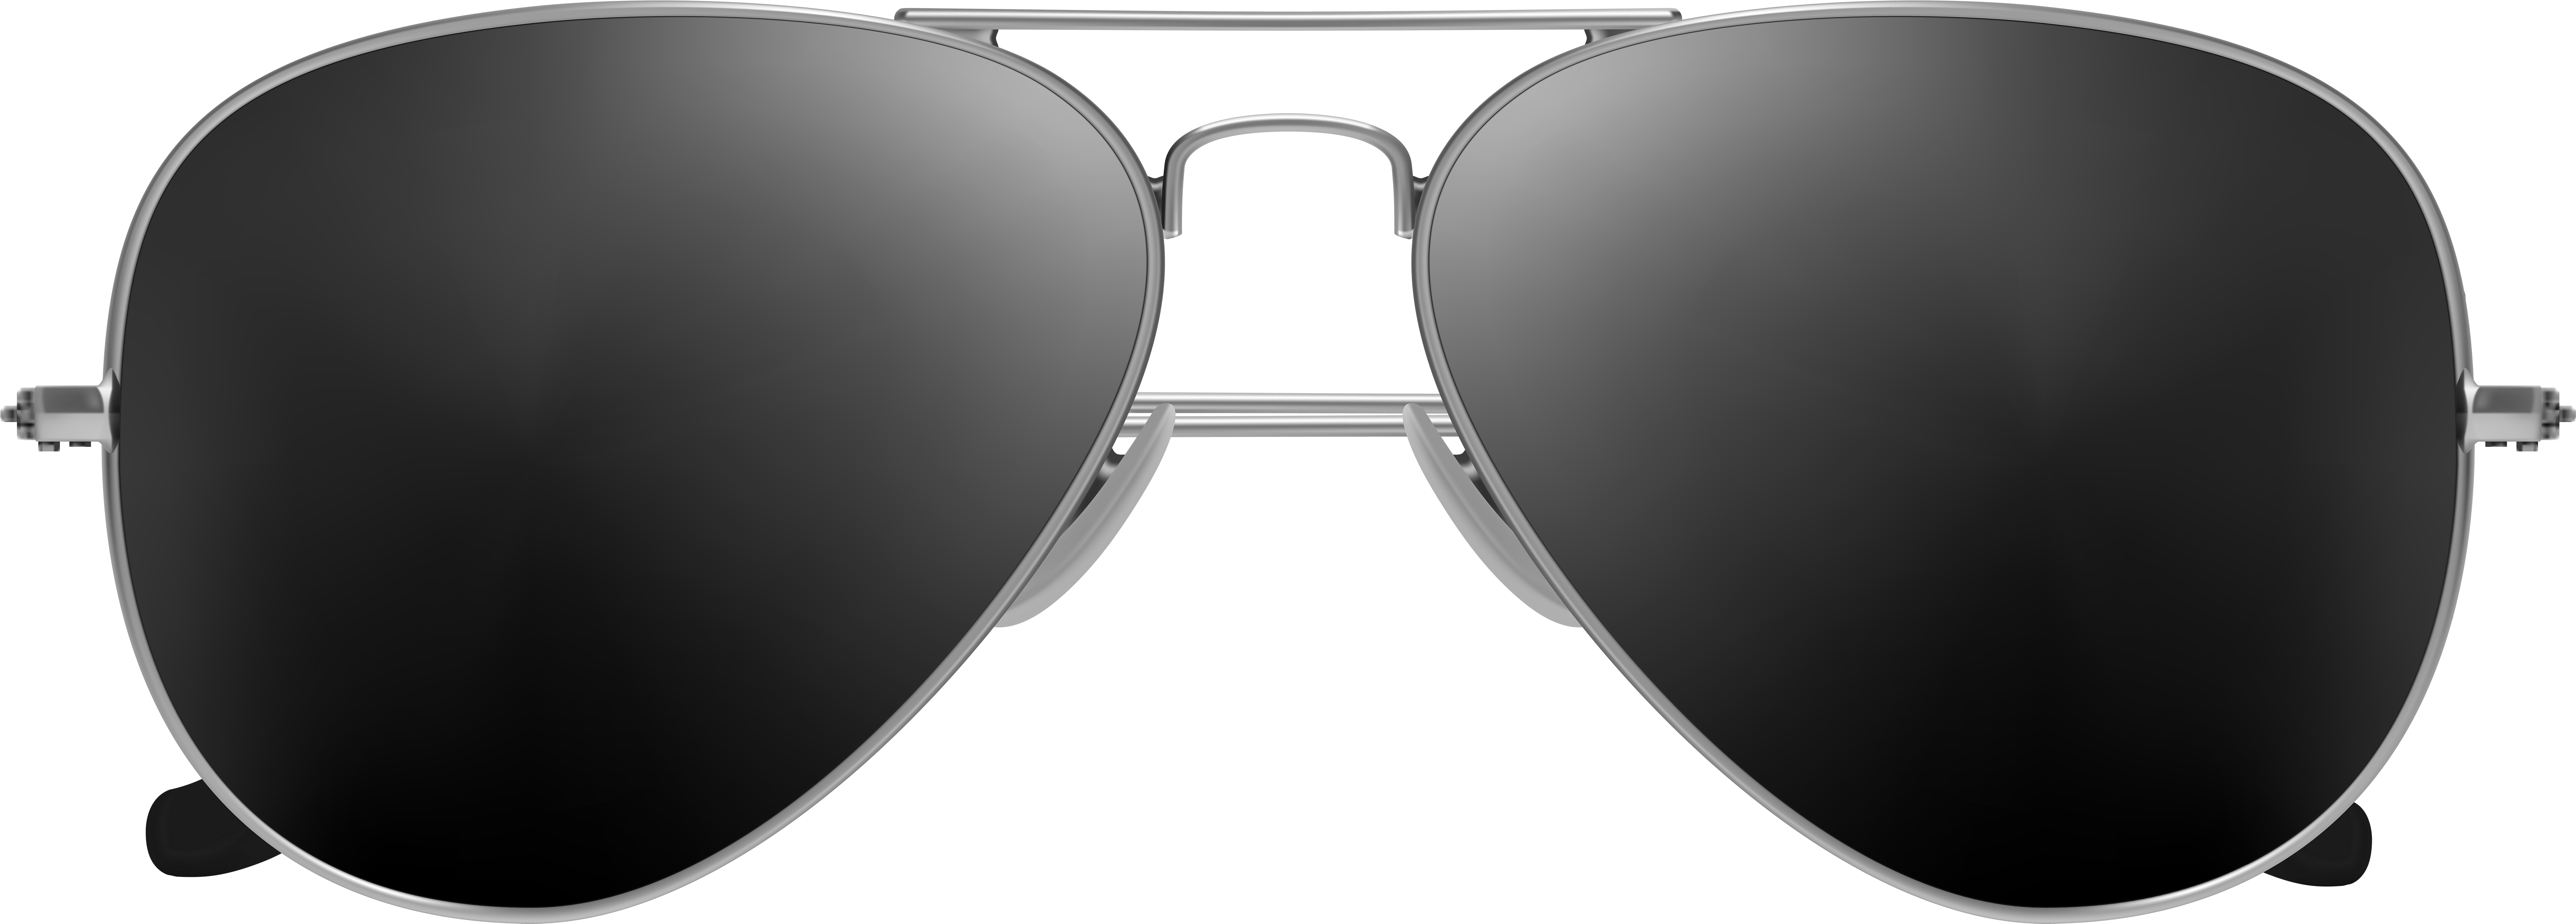 Aviator Sunglasses Transparent Background Black Aviator Glasses Png - Clip  Art Library